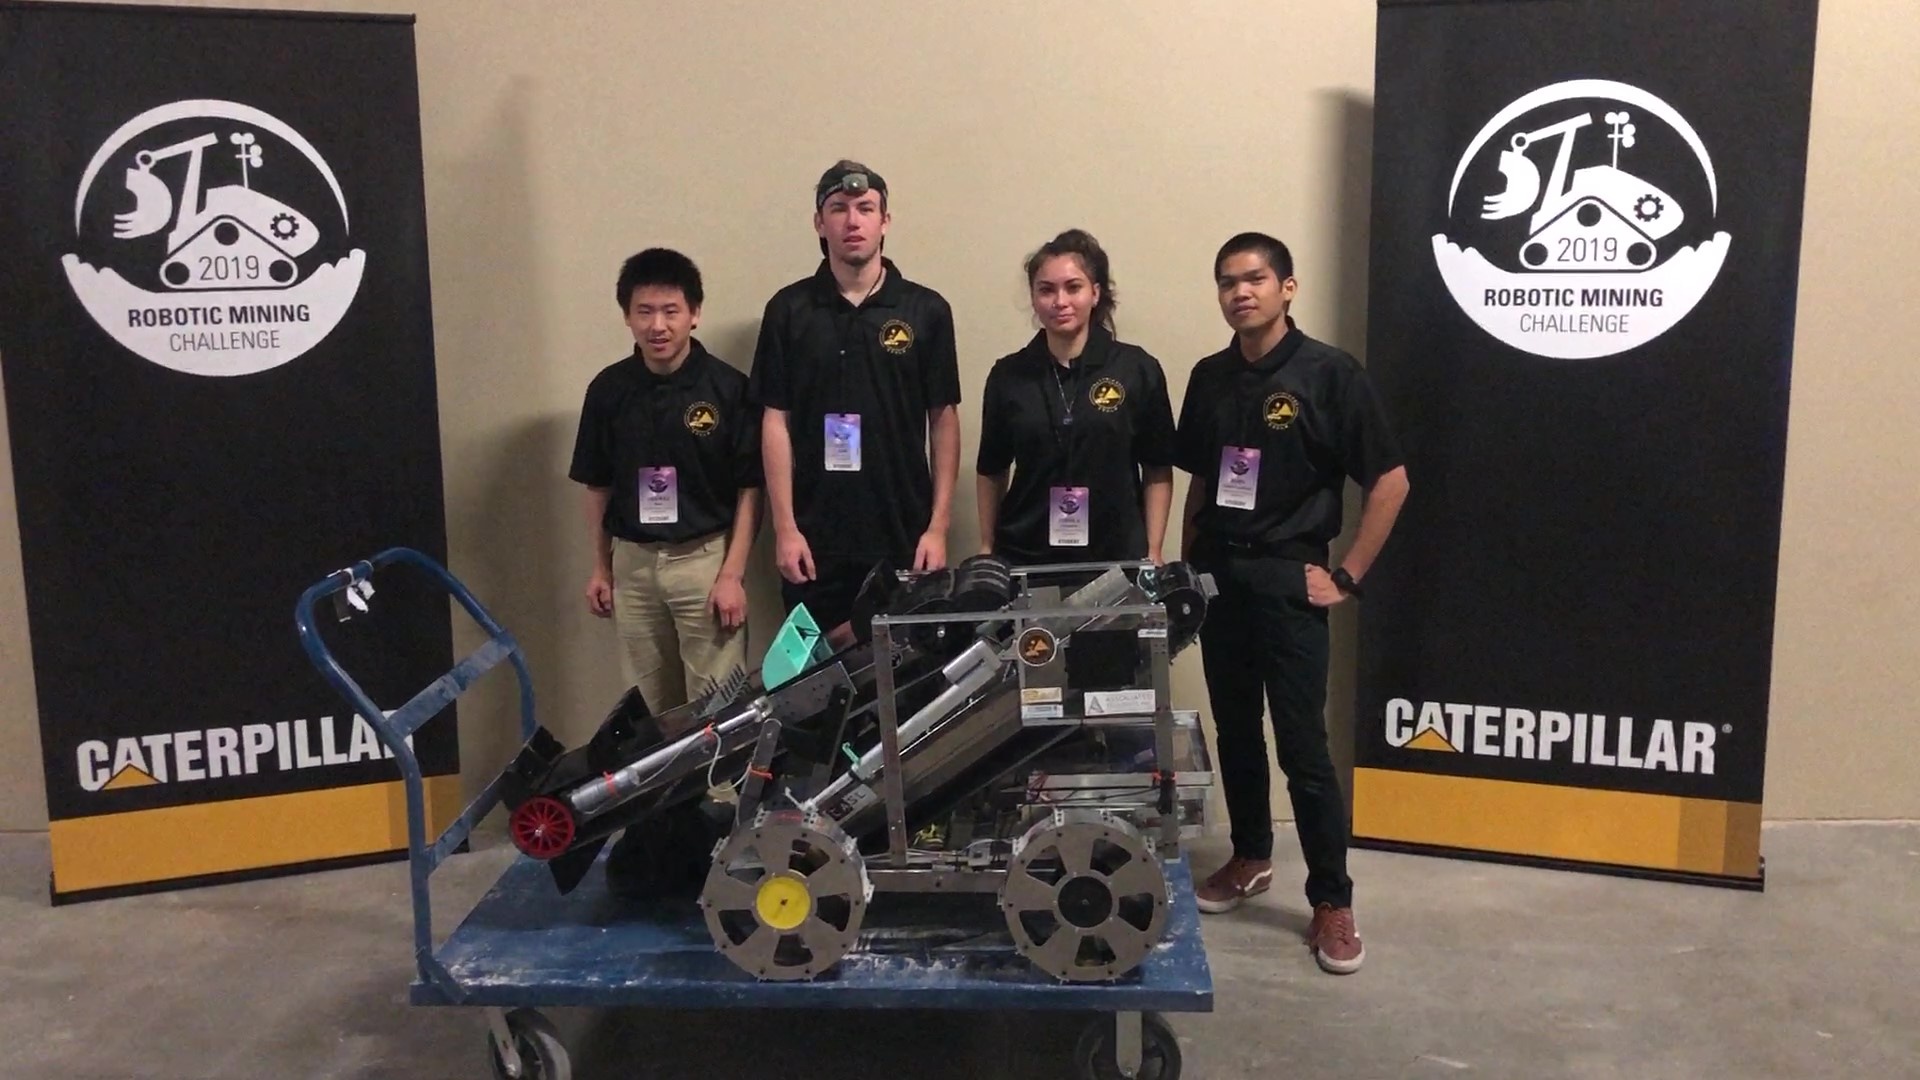 2019 Lunabotics Team with rover